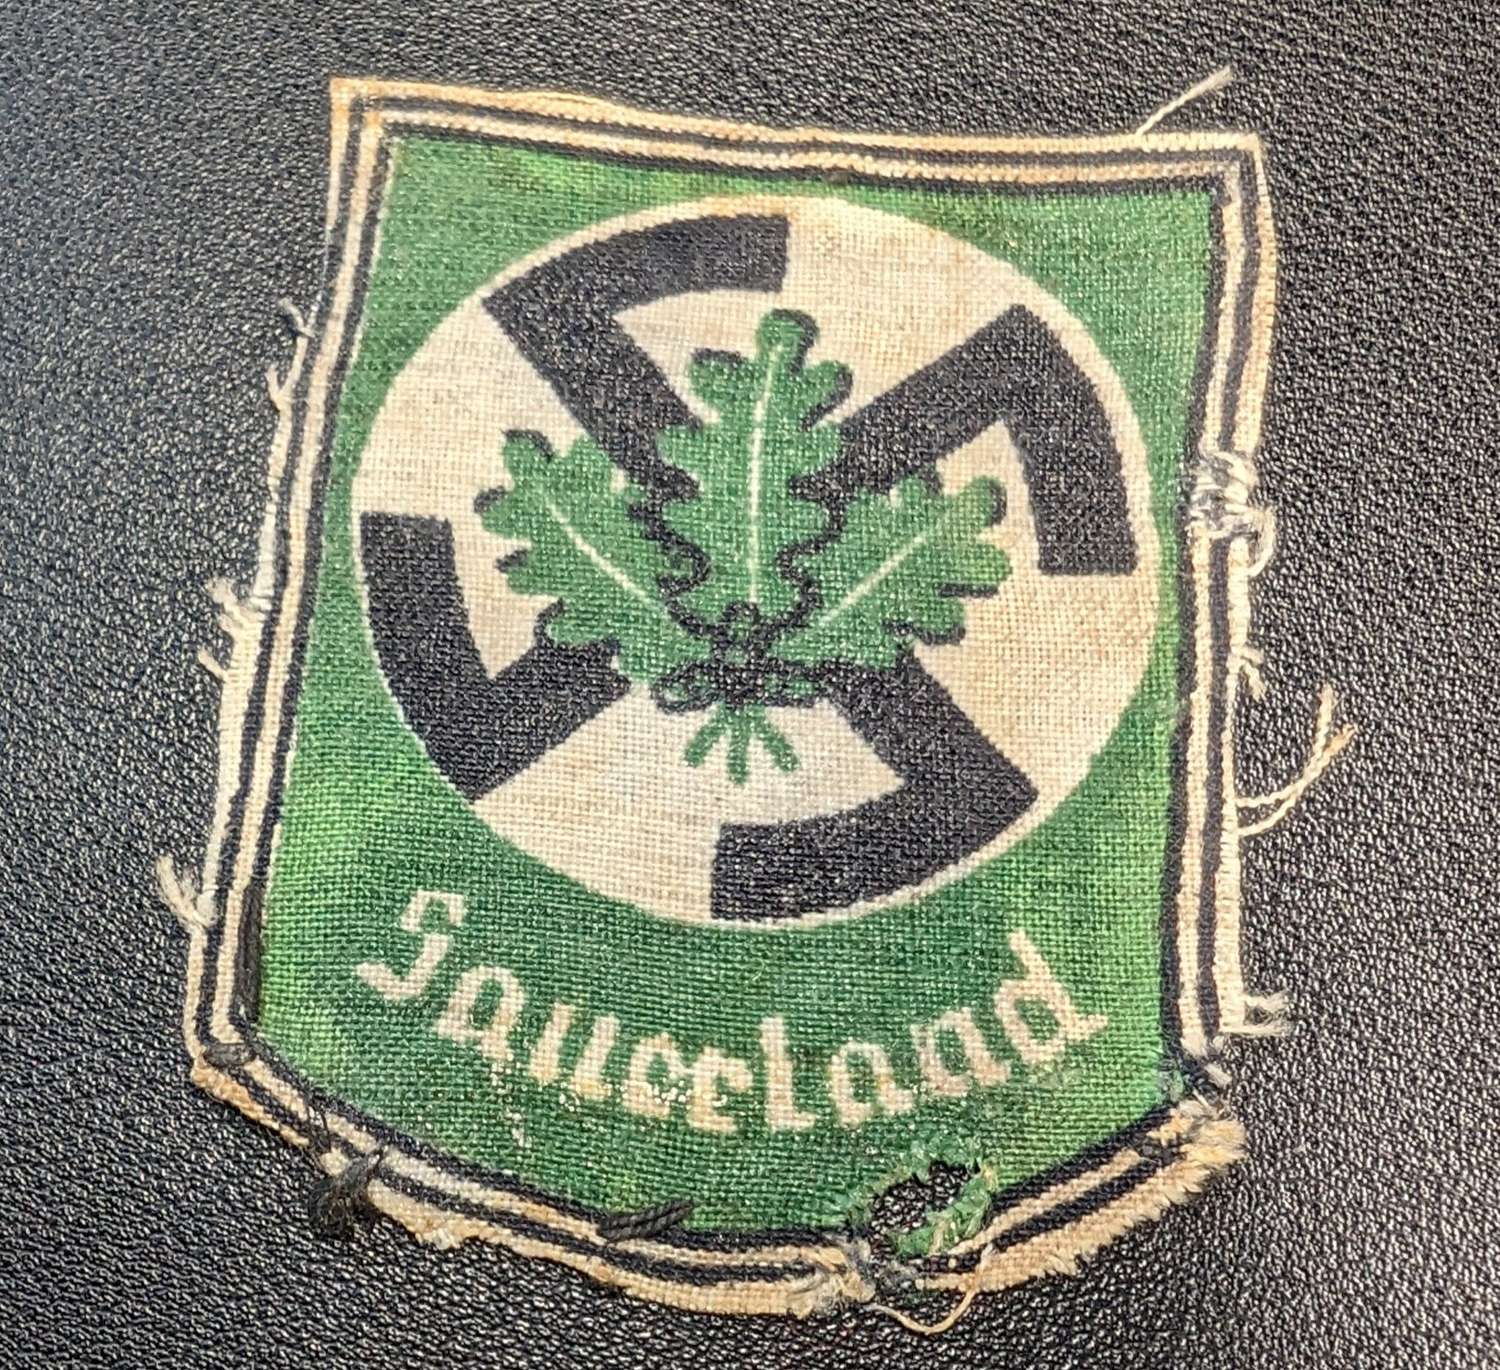 Ultra Rare Freikorps Sauerland Volunteer Arm Patch